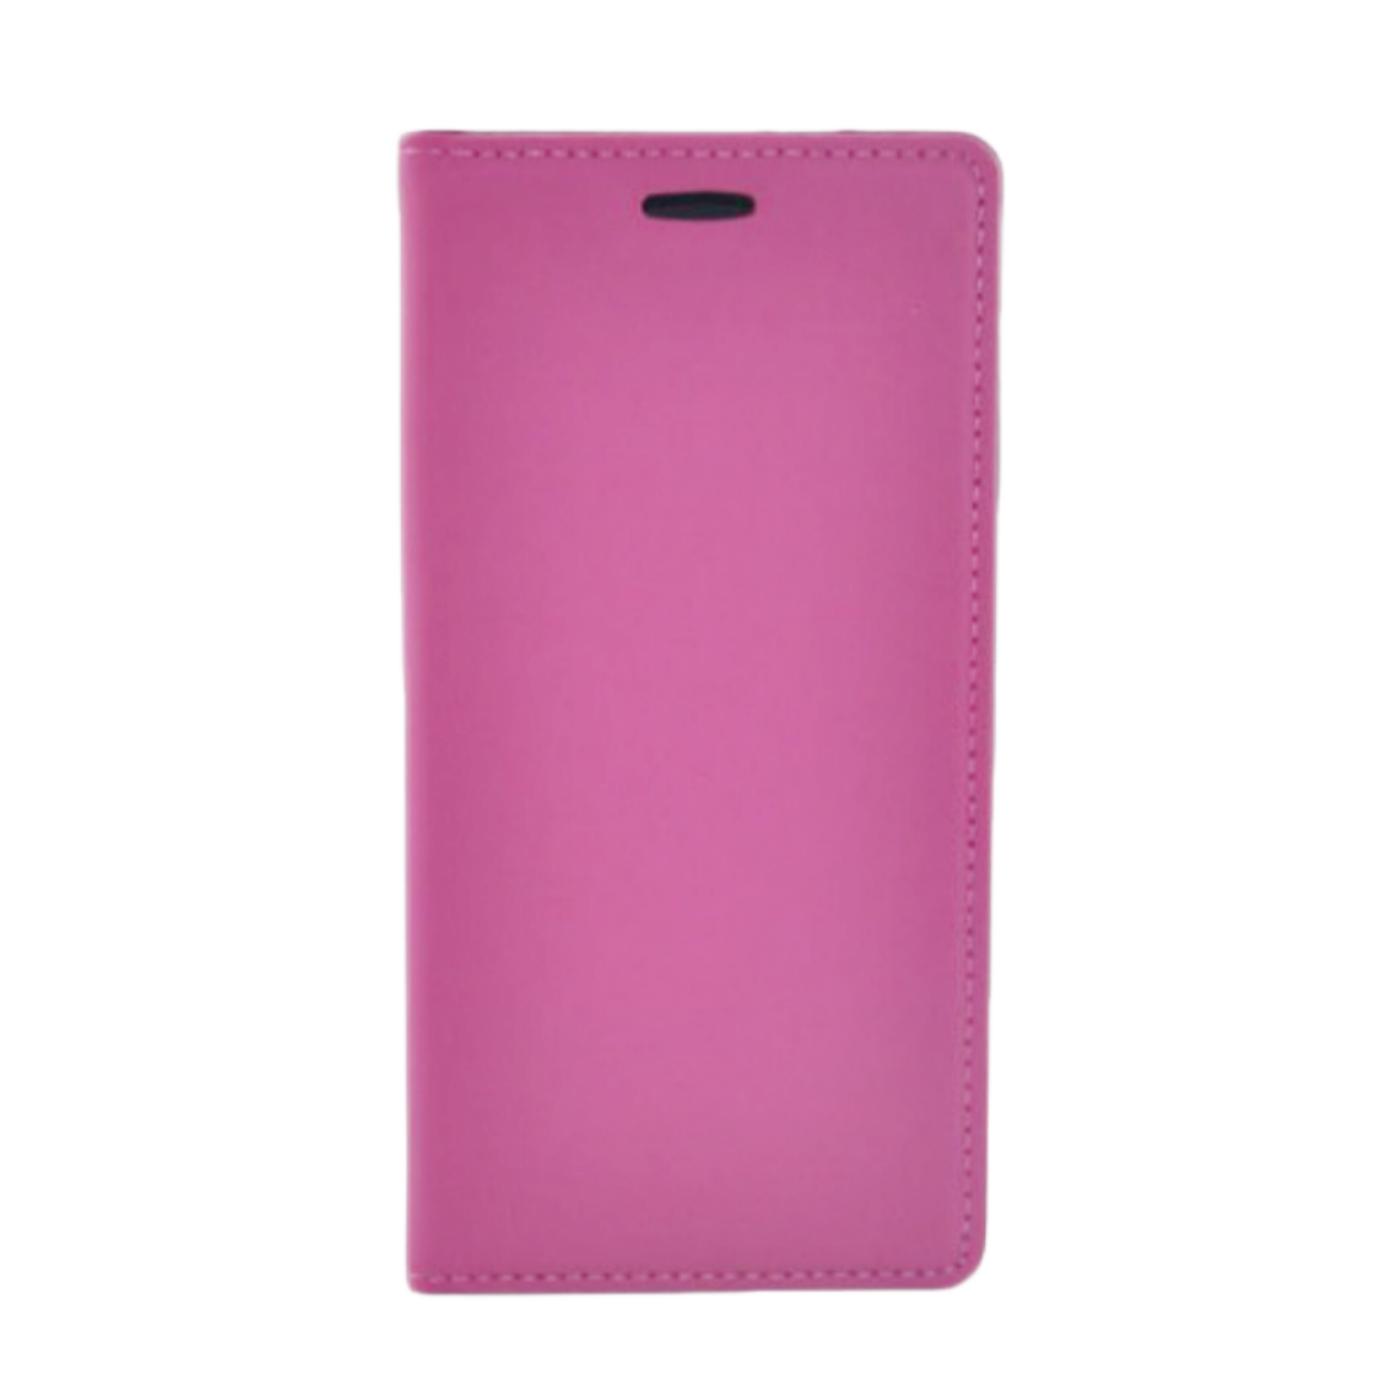 Futrola za mobitel Huawei P8 lite, pink